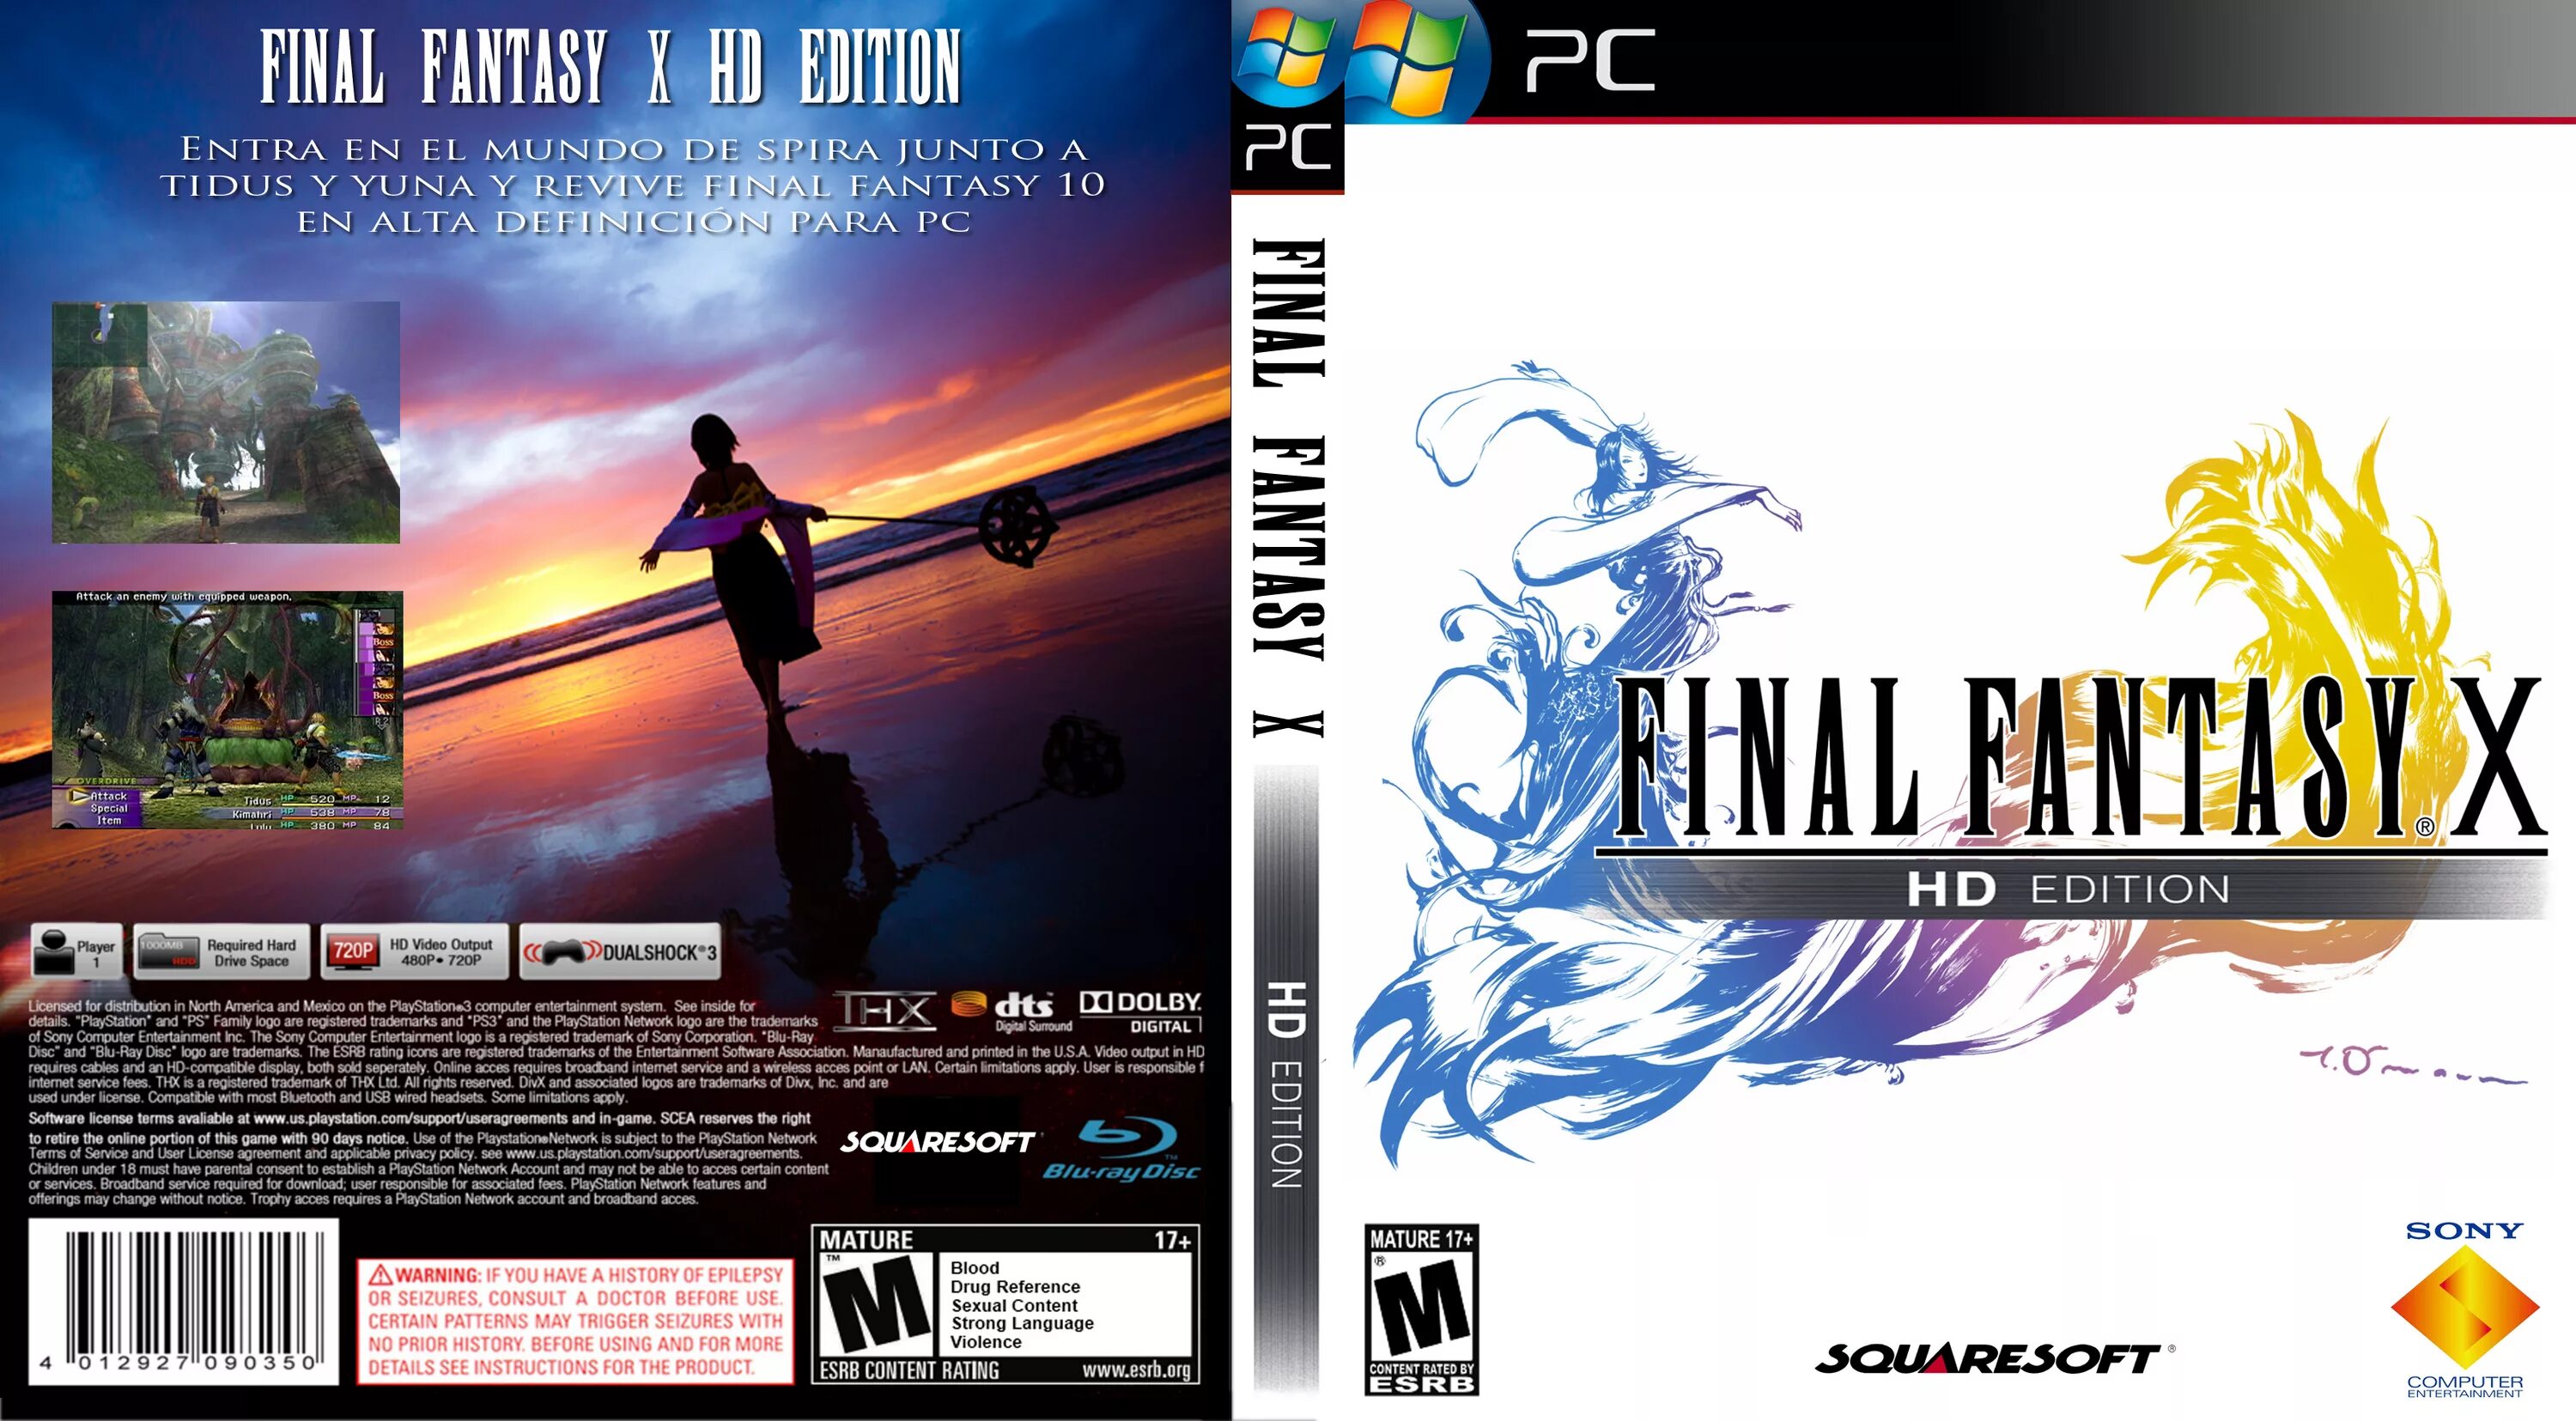 Final Fantasy x ps2 Cover. Final Fantasy ps2. Final Fantasy x обложка. PLAYSTATION 2 игры Final Fantasy 10.